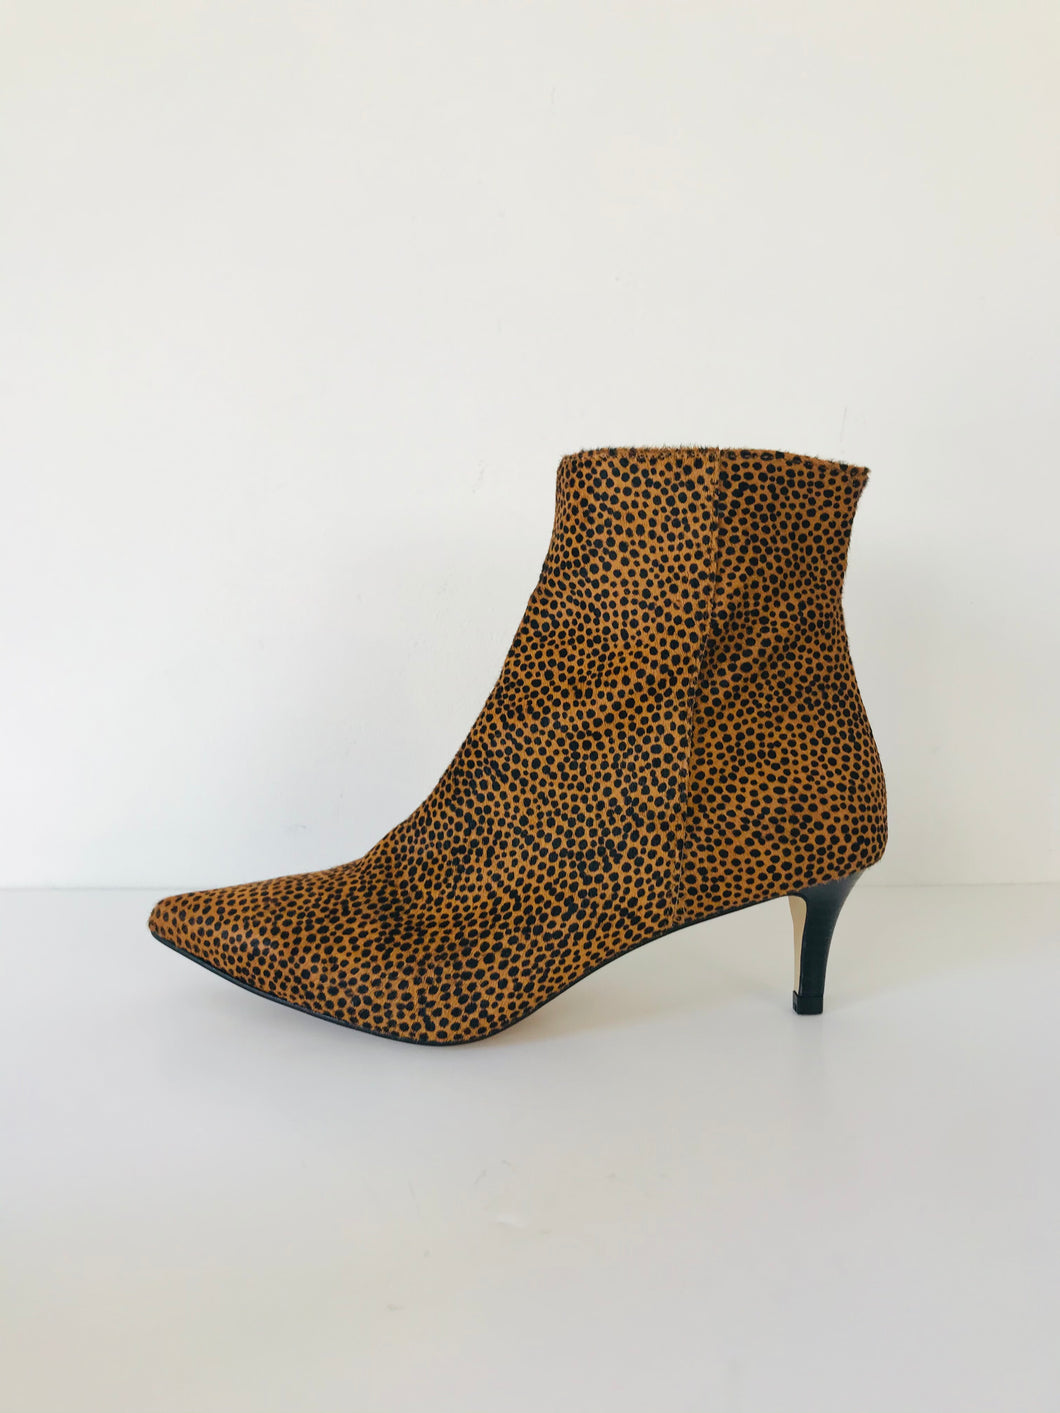 Mint Velvet Women’s Animal Print Kitten Heeled Boots NEW | 39 UK6 | Brow